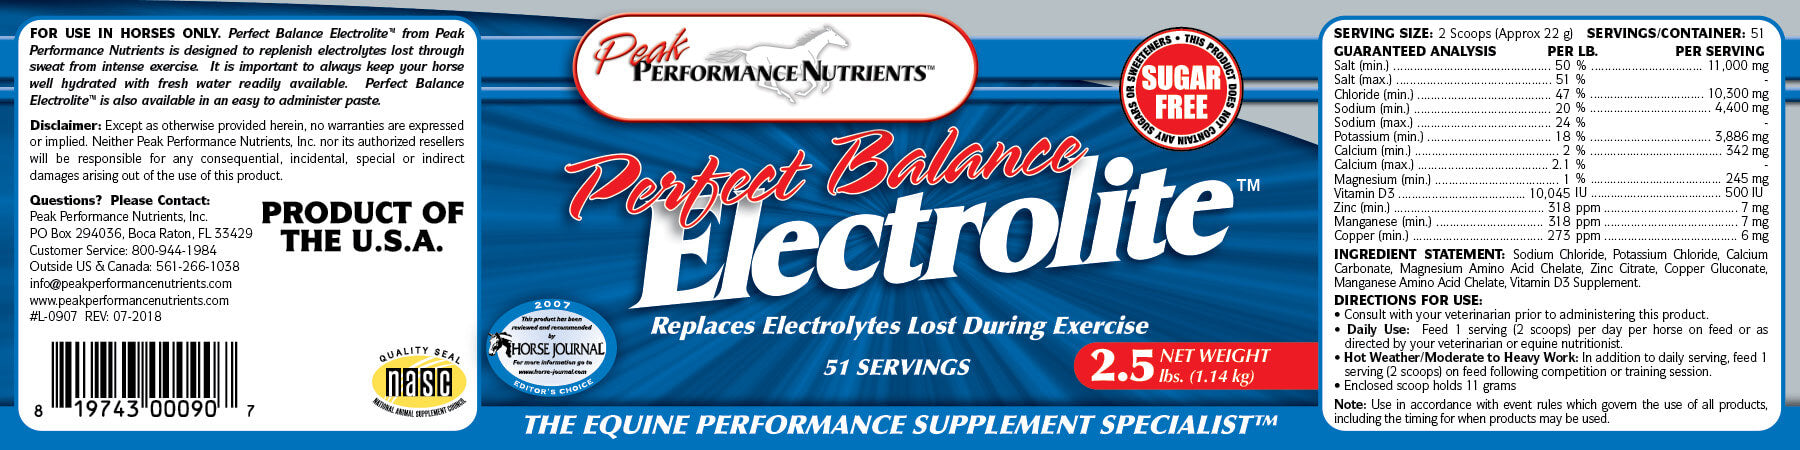 Perfect Balance Electrolite - Powder or Paste